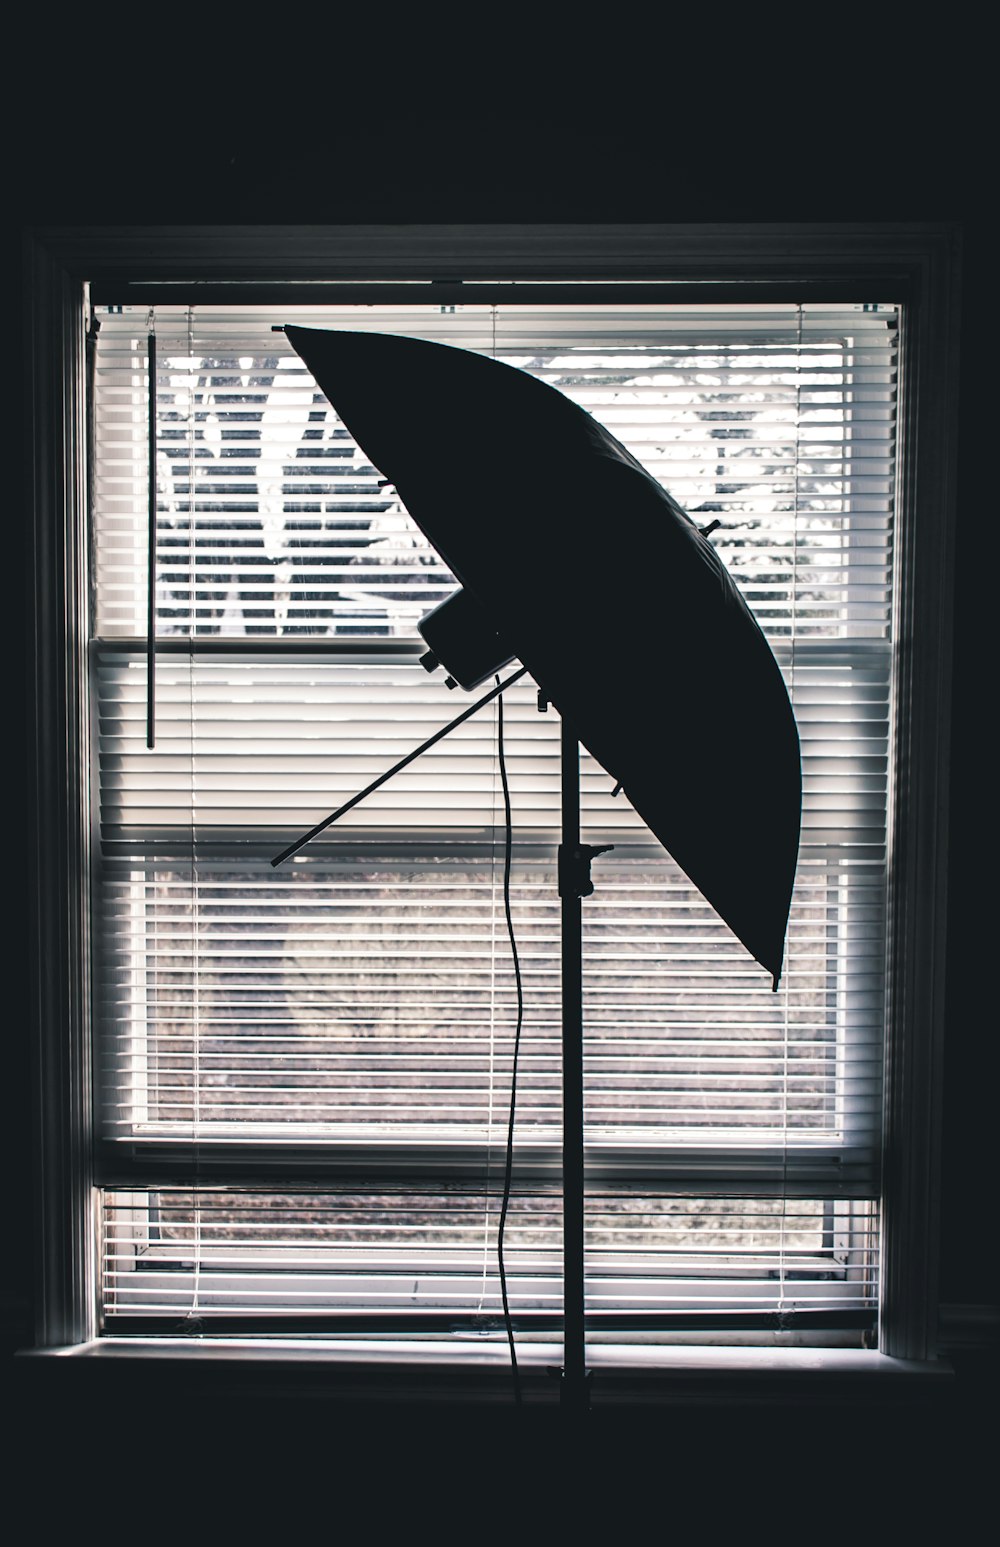 black umbrella near white window blinds